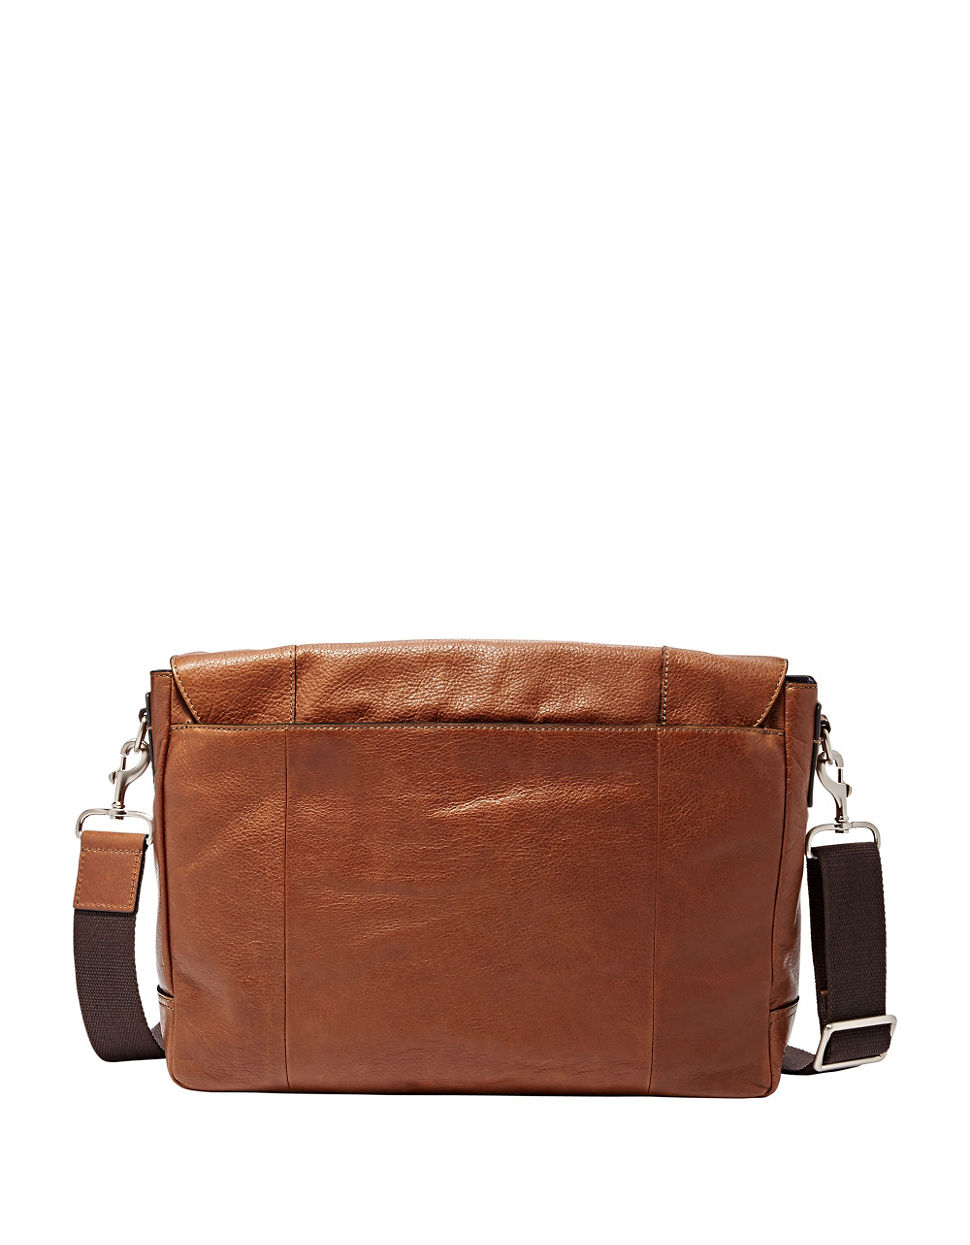 Lyst - Fossil Graham Canvas Messenger Bag in Brown for Men